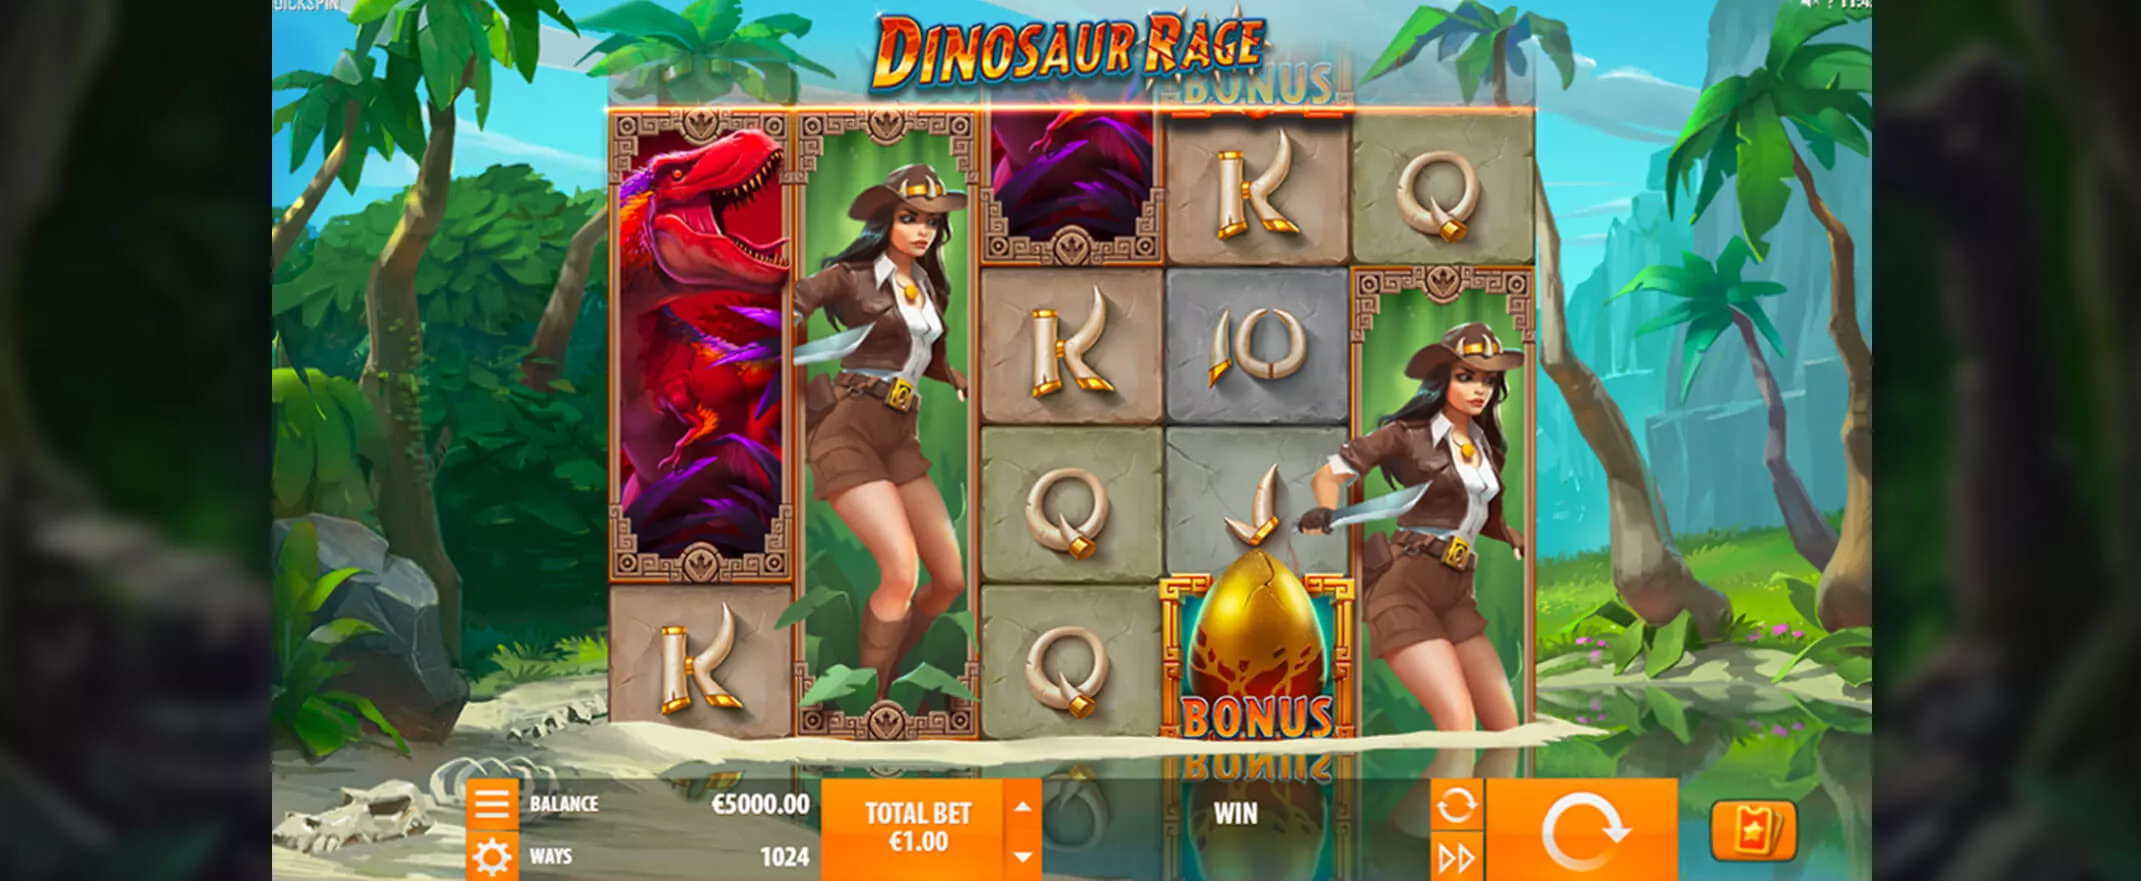 Dinosaur Rage slot screenshot of the reels